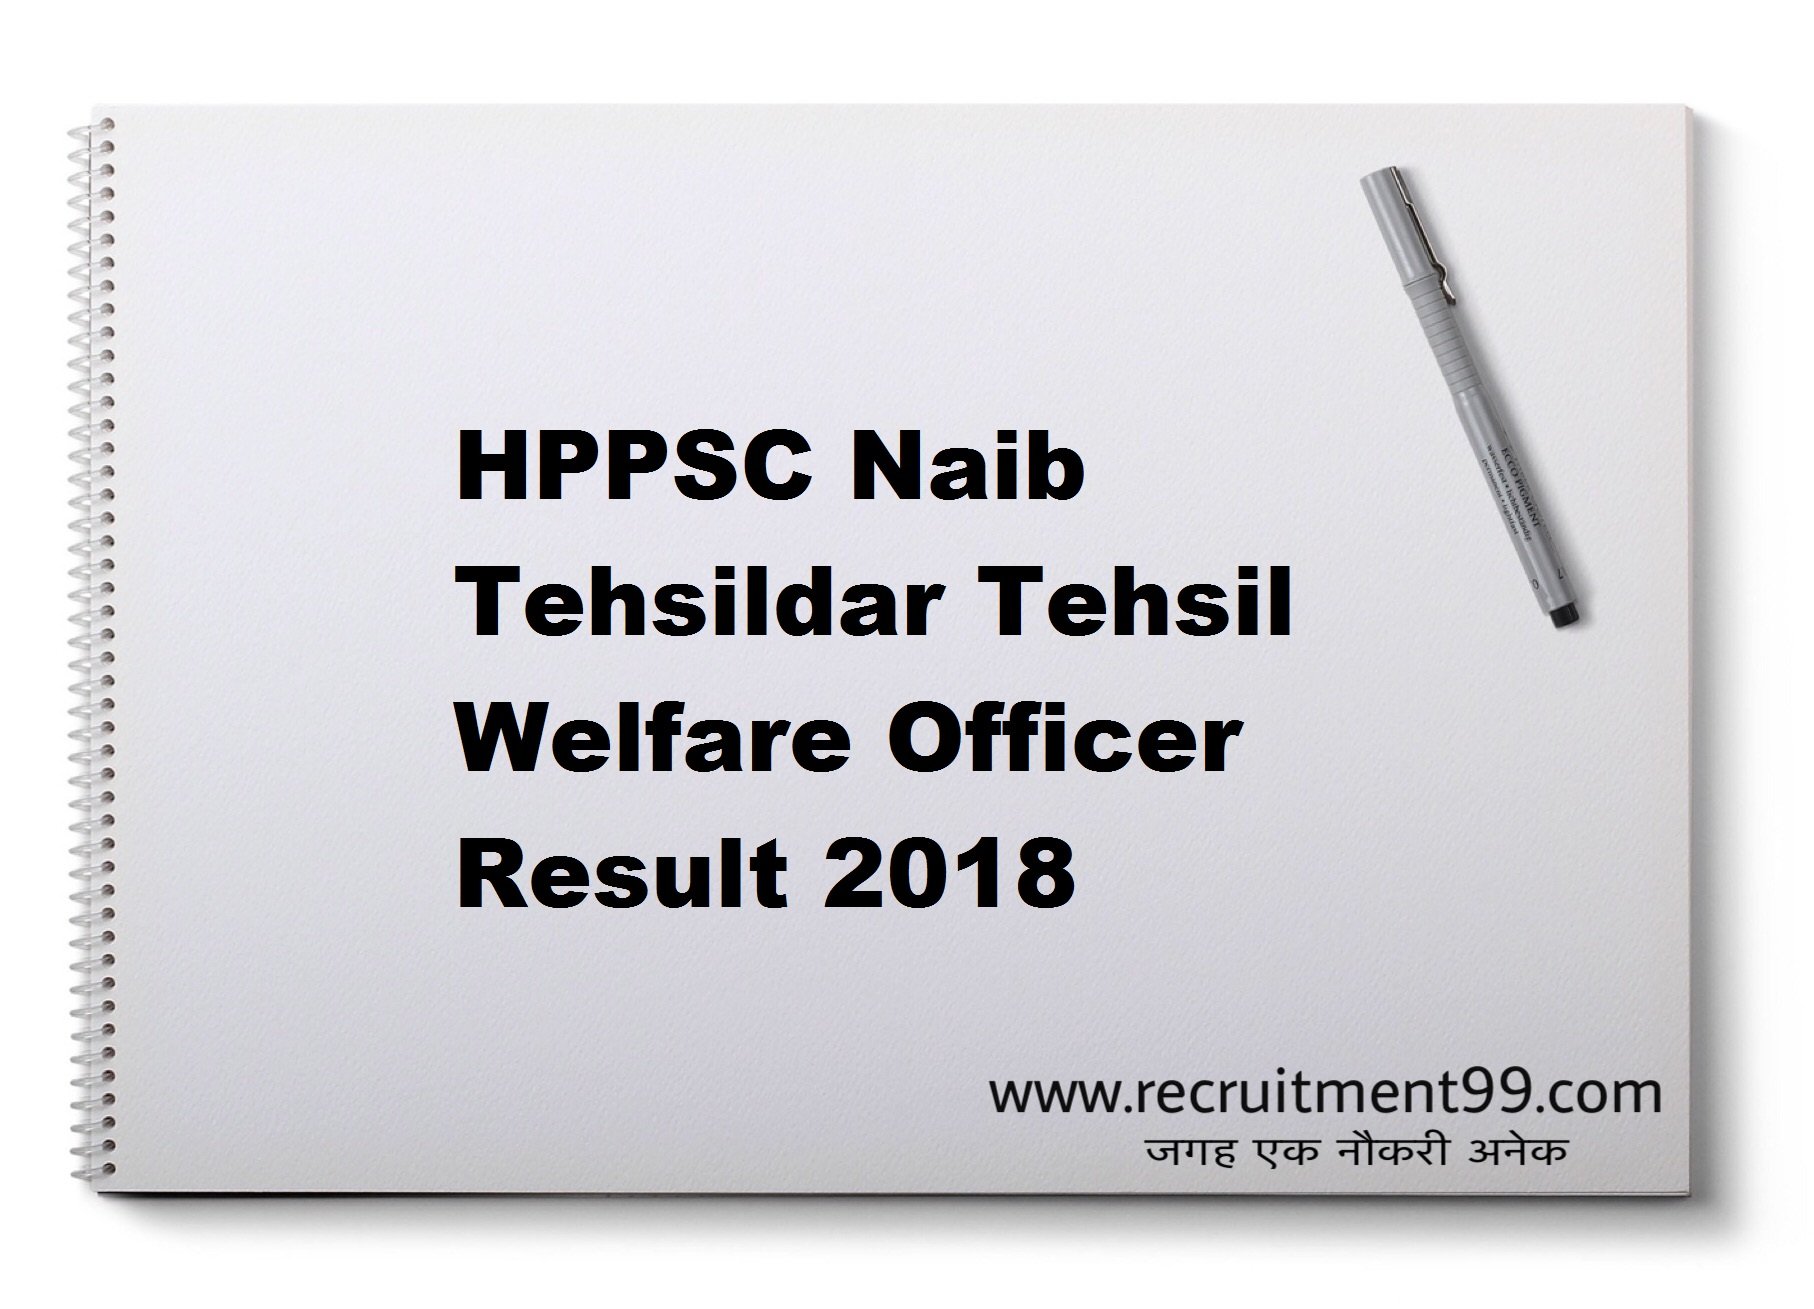 HPPSC Naib Tehsildar Tehsil Welfare Officer Recruitment Admit Card Result 2018